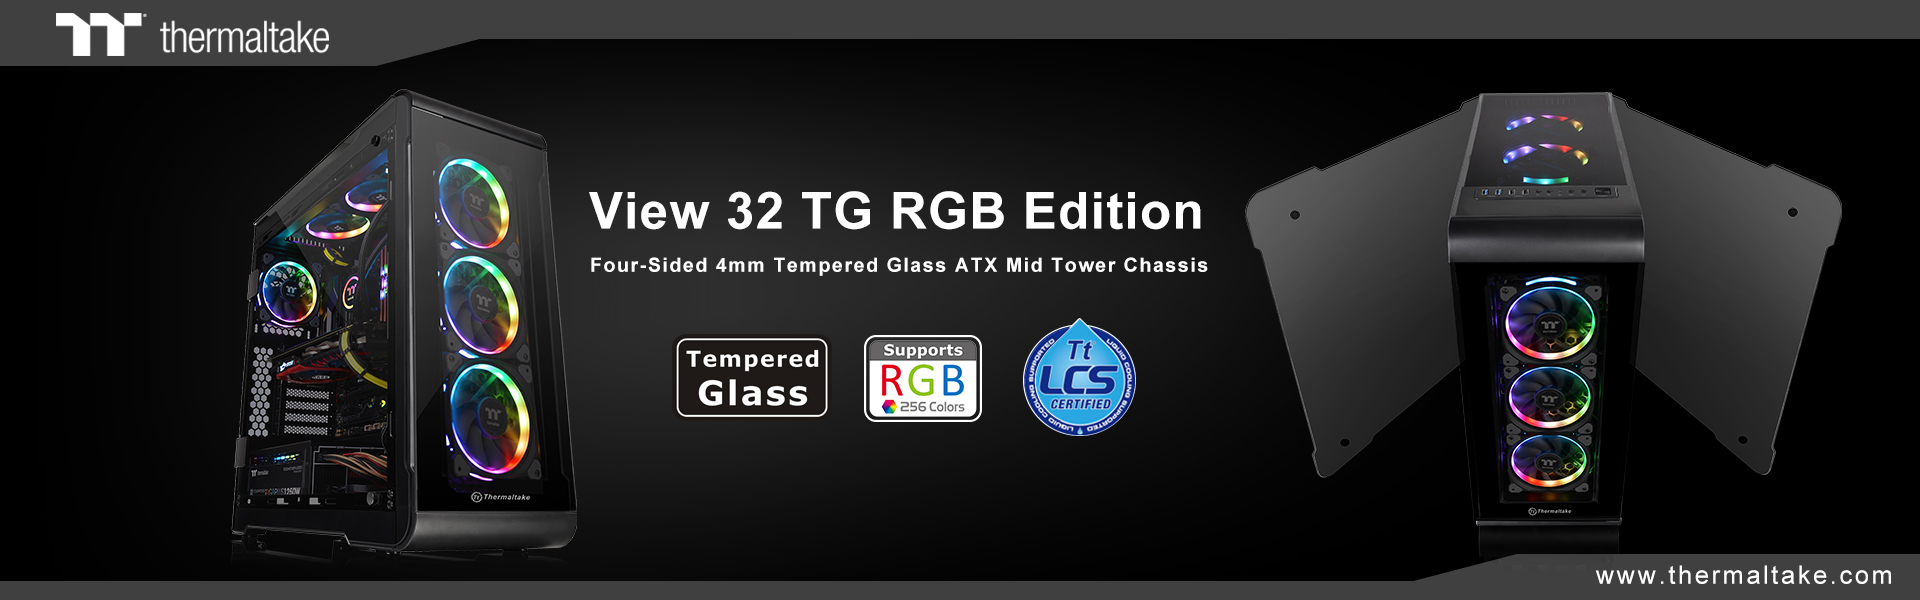 thermaltake new view 32 tg rgb edition mid tower chassis Thermaltake เปิดตัวเคส View 32 TG RGB Edition Mid Tower Chassis รุ่นใหม่ล่าสุด